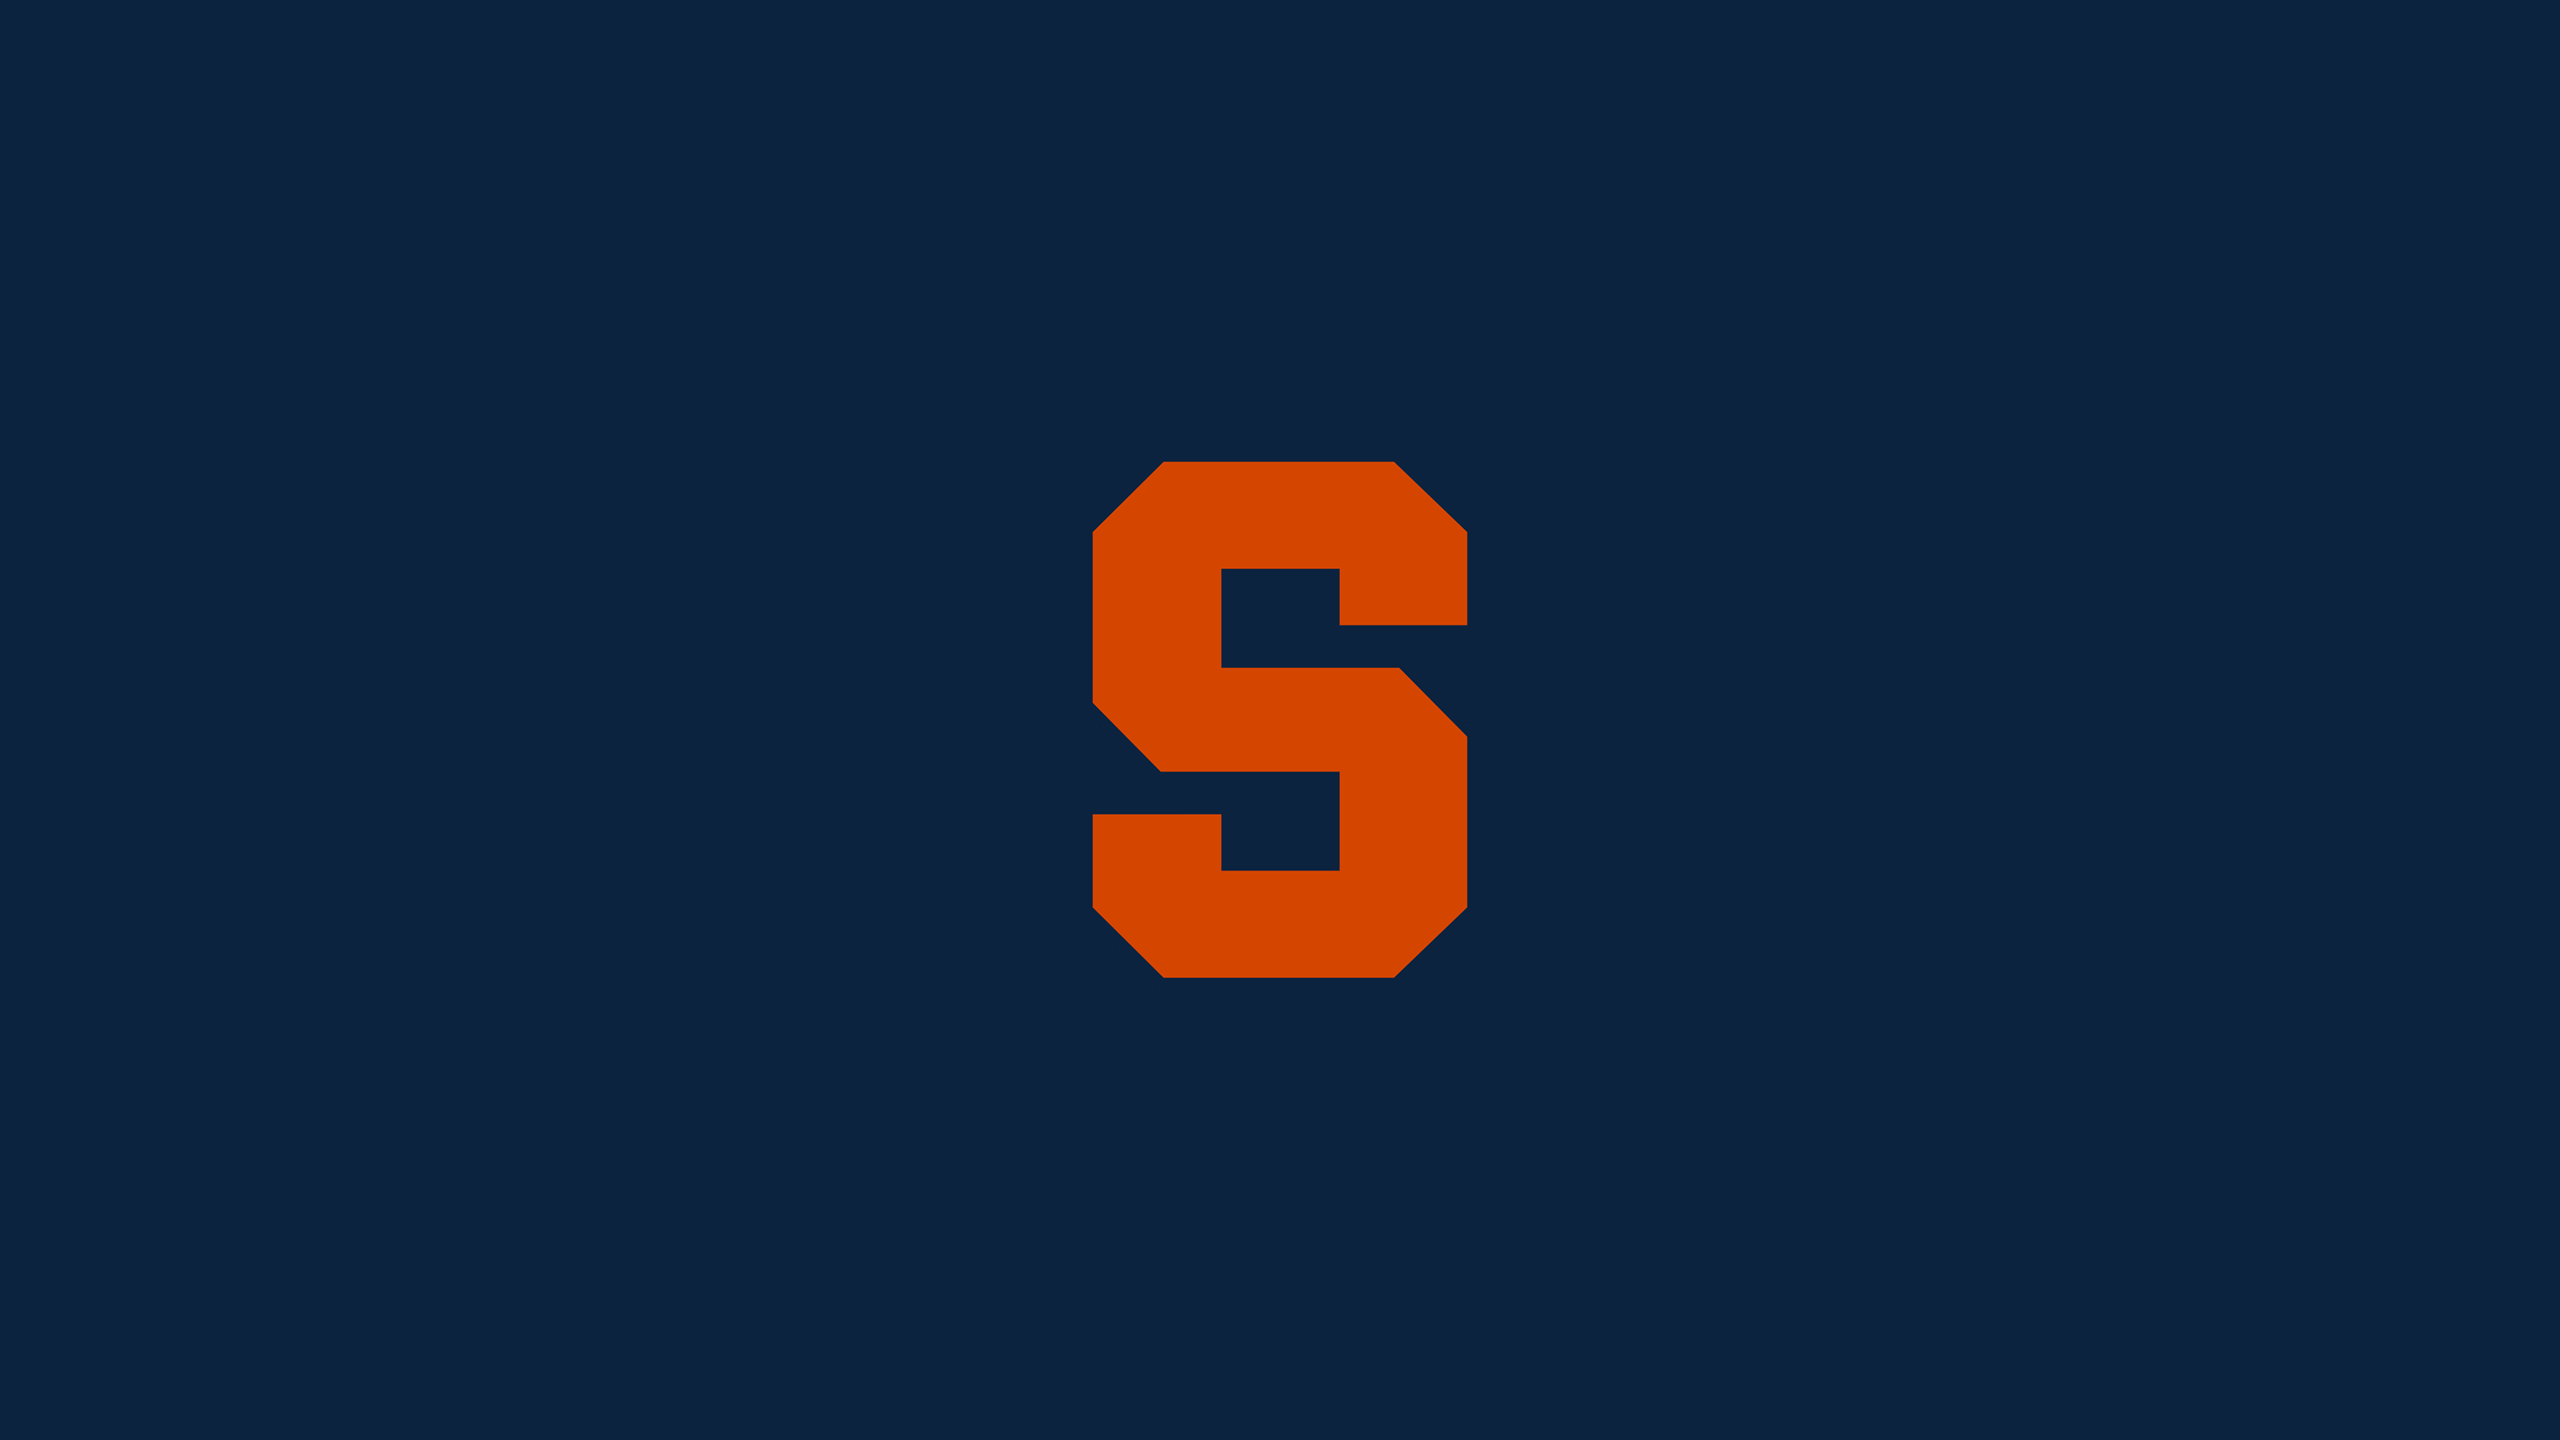 Syracuse Orange Basketball - NCAAB - Square Bettor